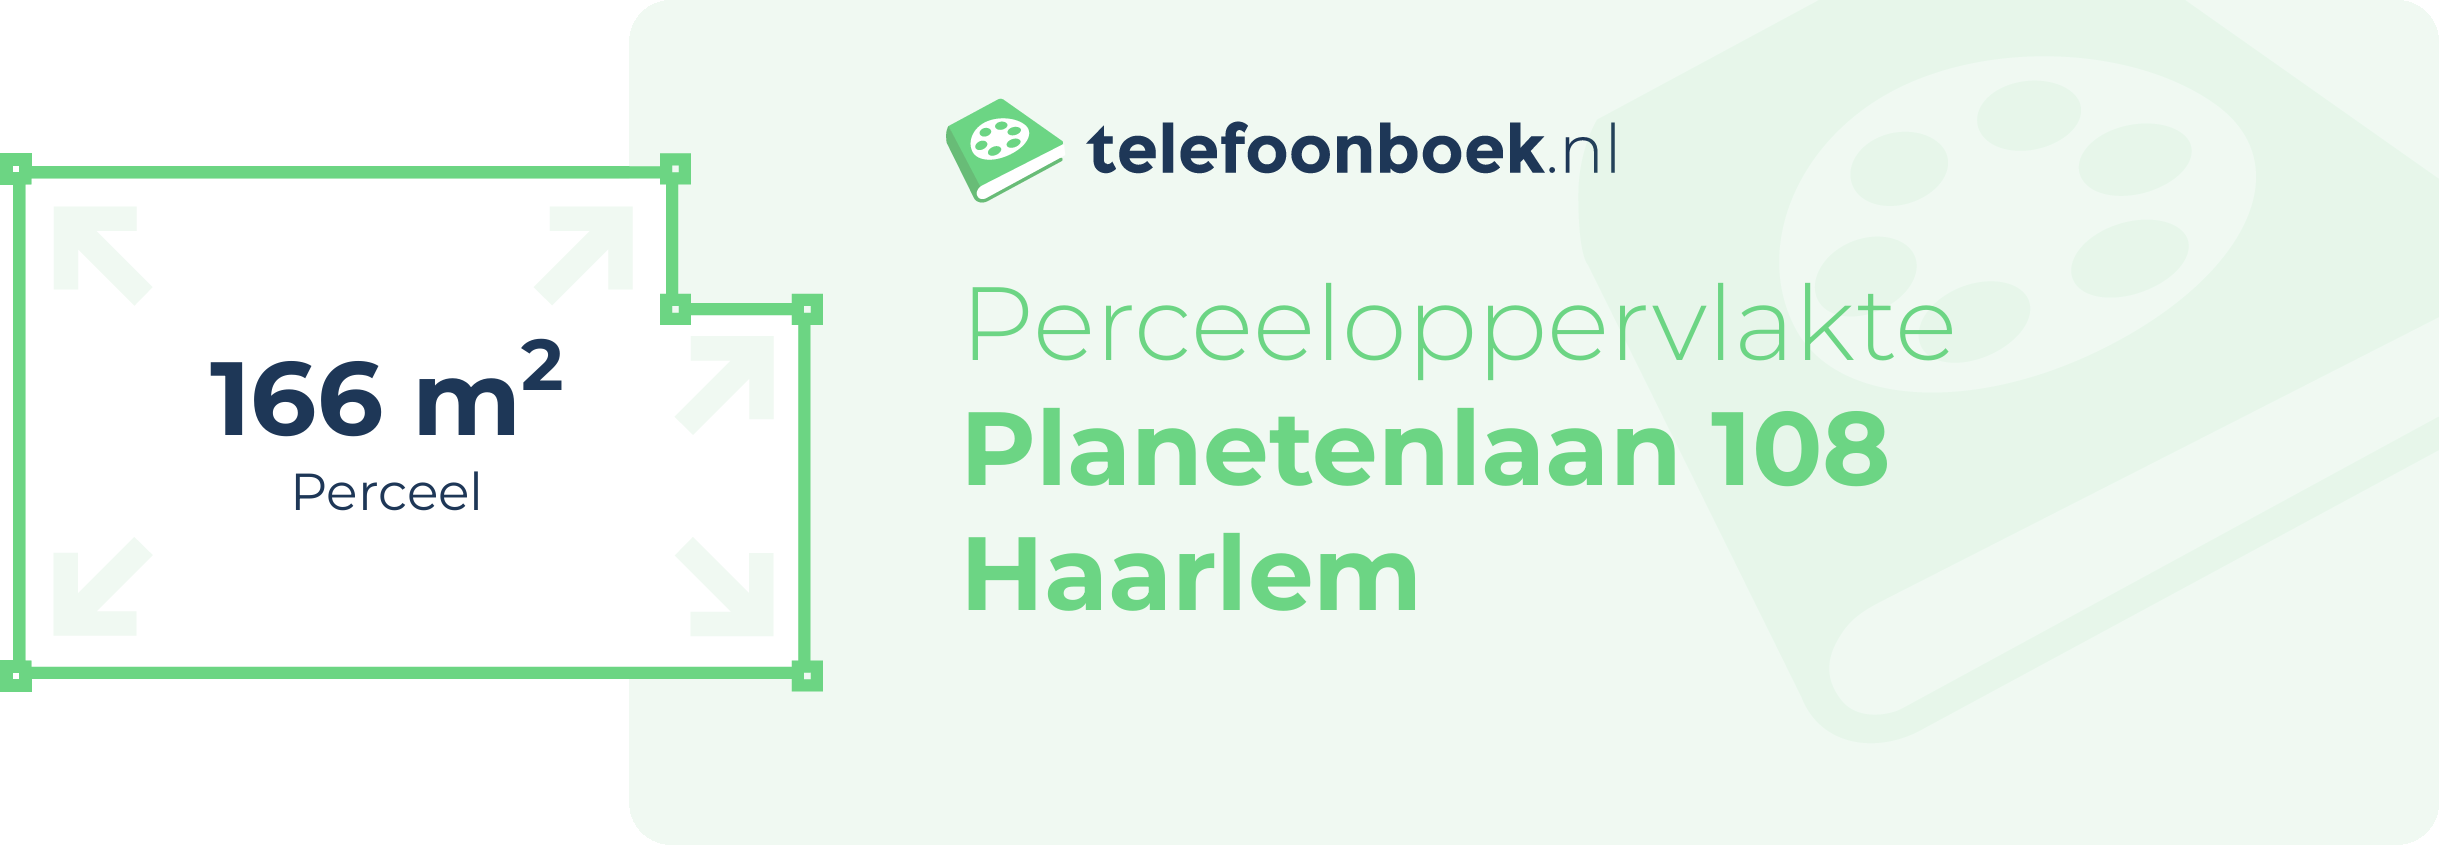 Perceeloppervlakte Planetenlaan 108 Haarlem